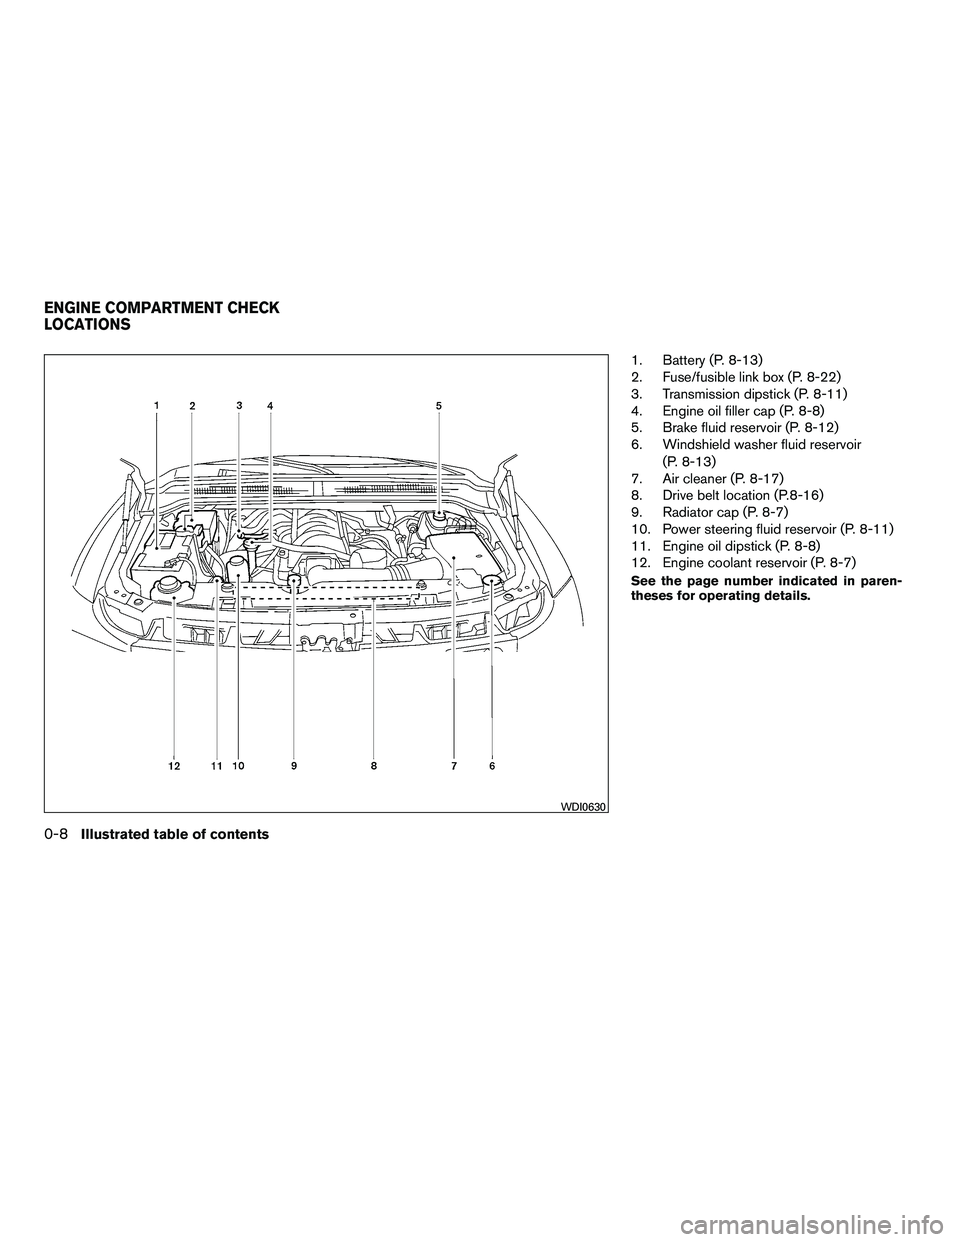 NISSAN ARMADA 2010  Owners Manual 1. Battery (P. 8-13)
2. Fuse/fusible link box (P. 8-22)
3. Transmission dipstick (P. 8-11)
4. Engine oil filler cap (P. 8-8)
5. Brake fluid reservoir (P. 8-12)
6. Windshield washer fluid reservoir(P. 